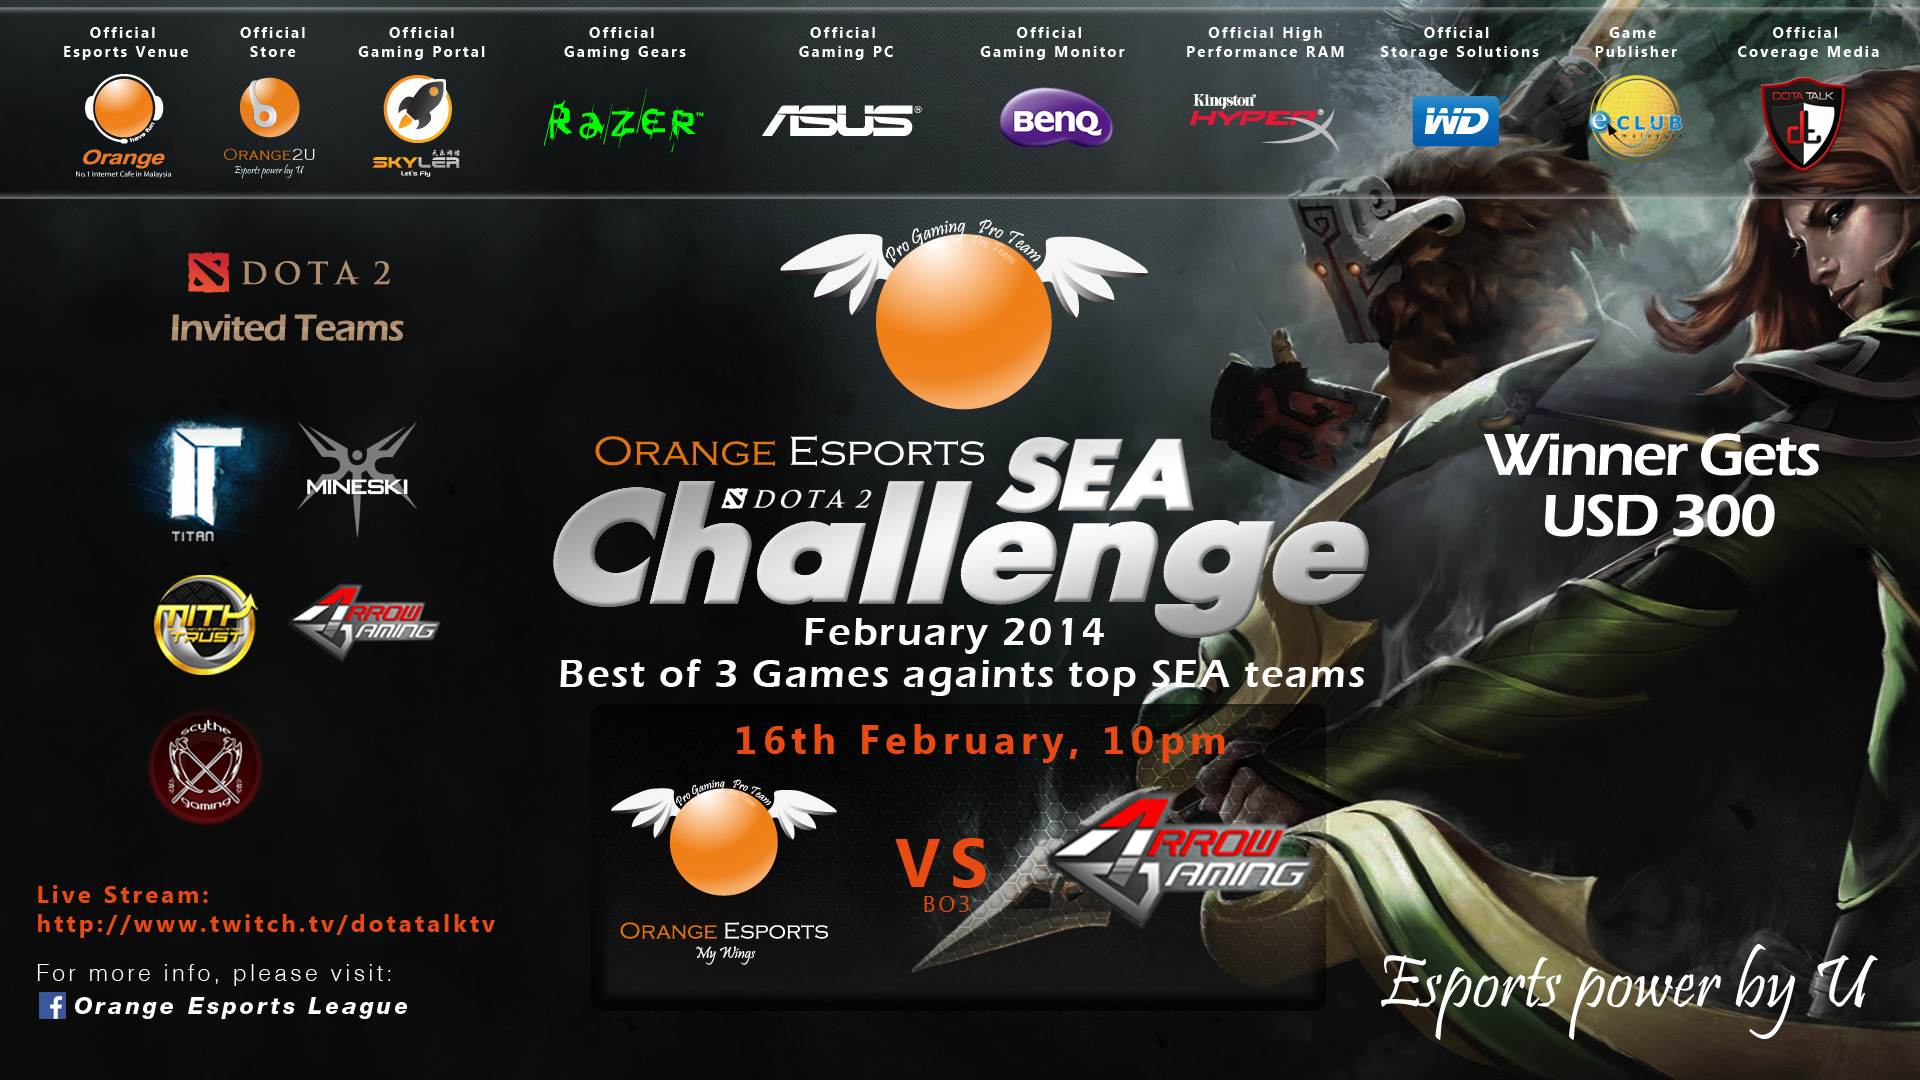 Two DOTA 2 Tournaments Announced by Orange Esports > GamersBook